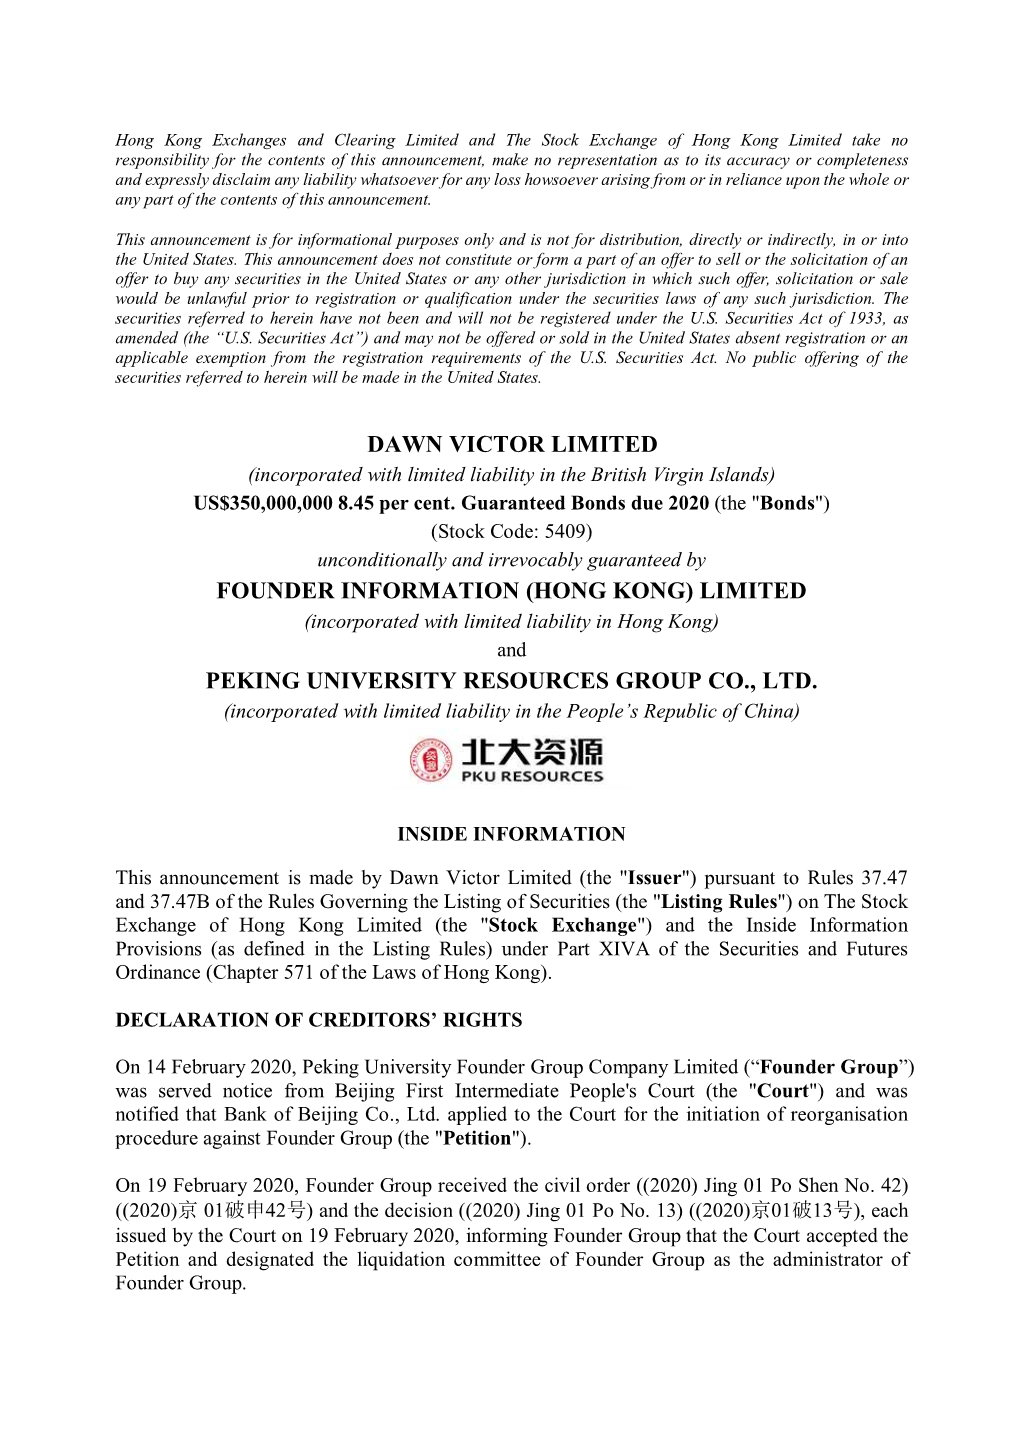 (Hong Kong) Limited Peking University Resources